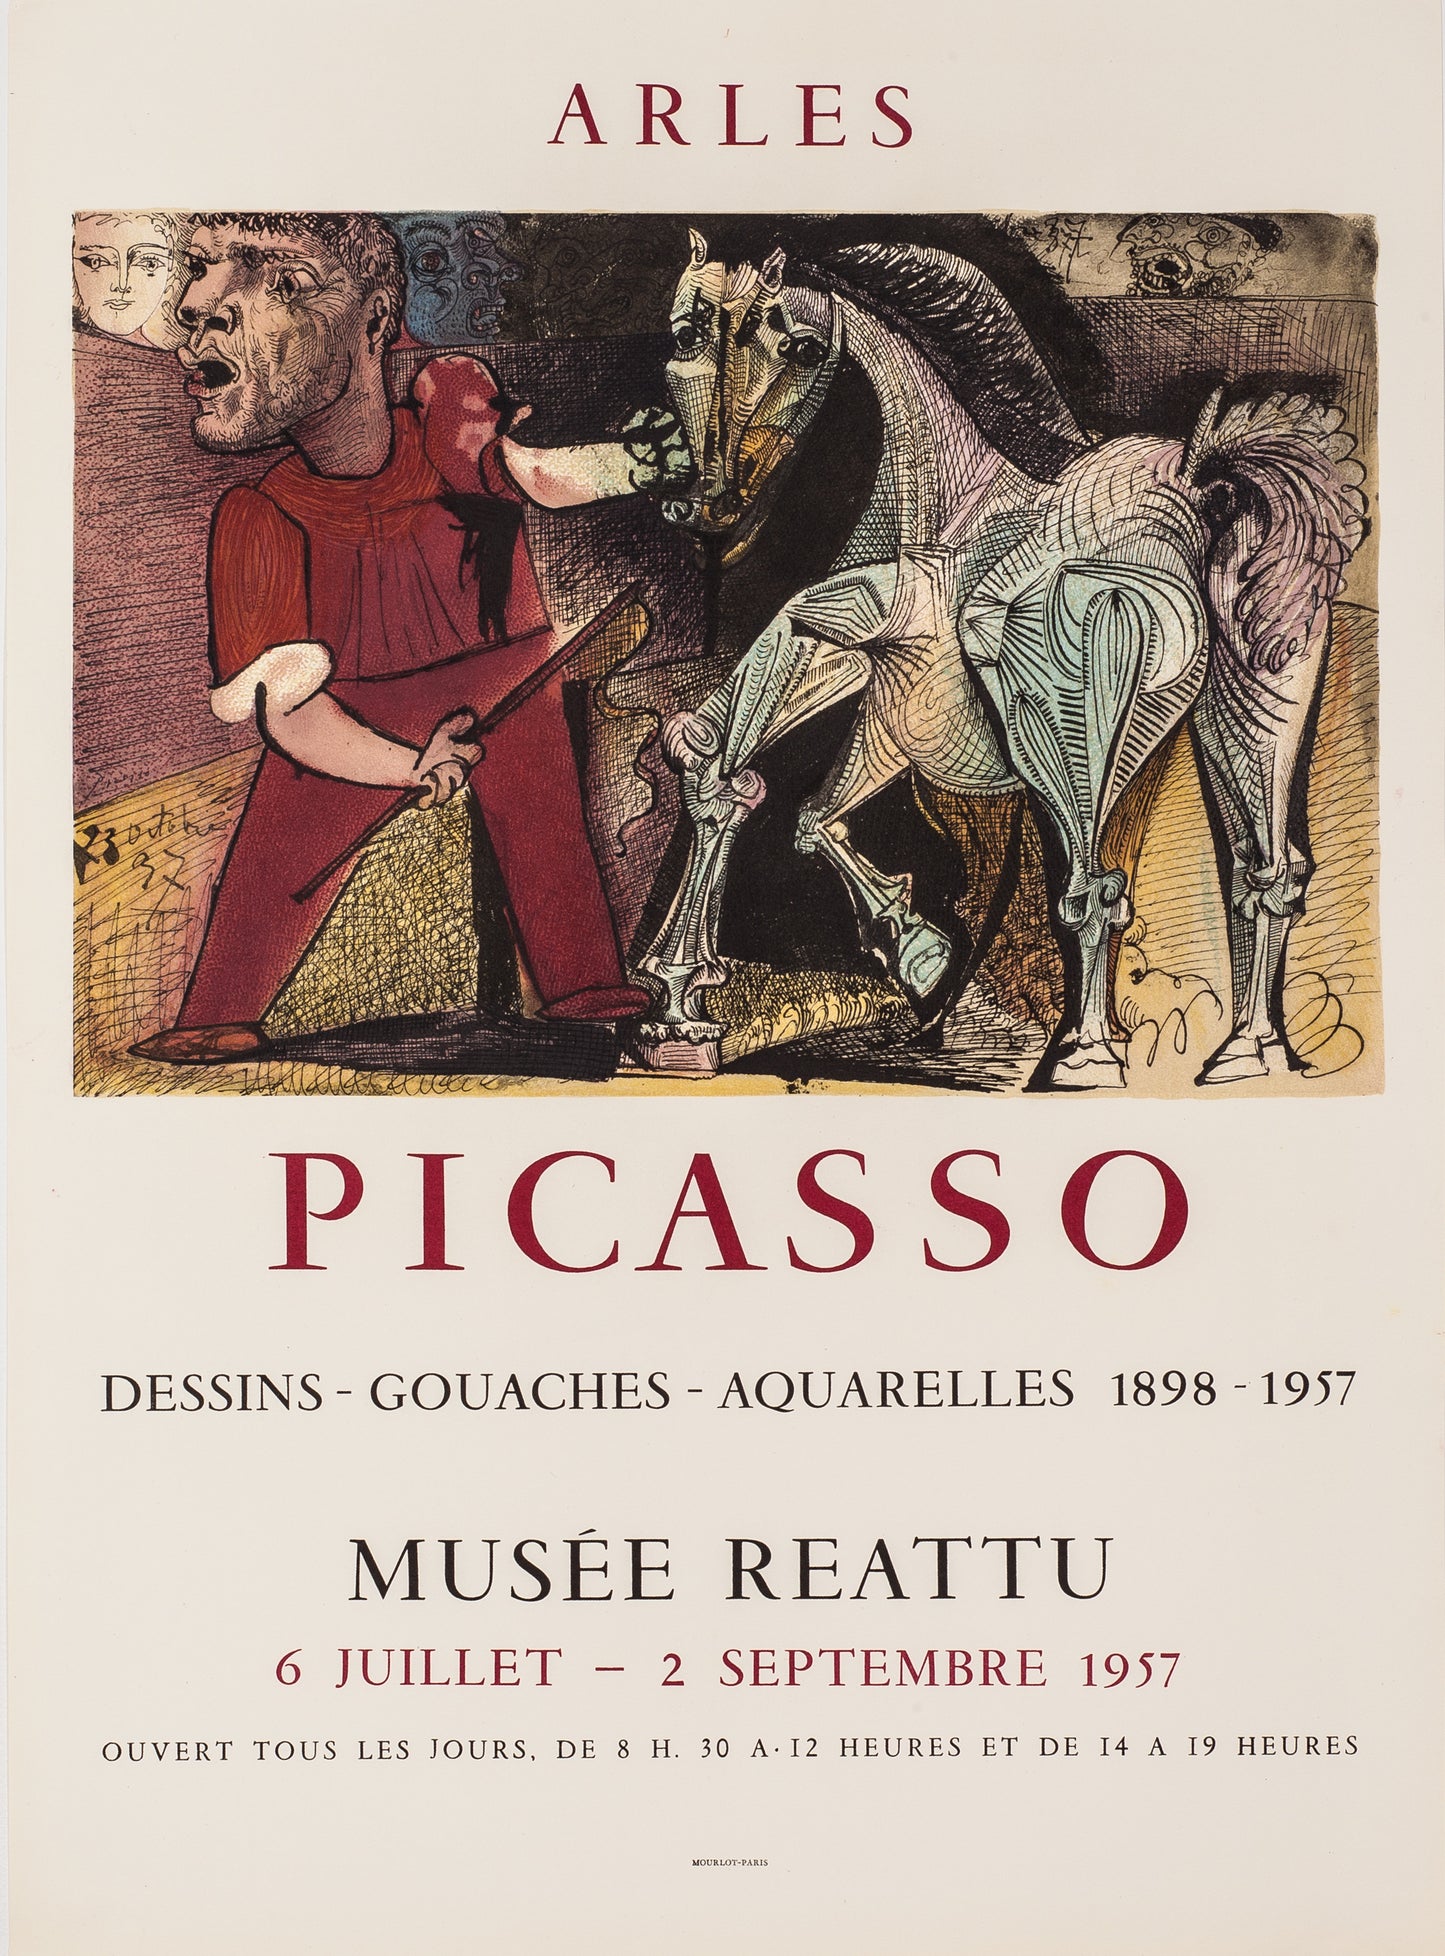 Musee Reattu -  Dessins, Gouaches, Aquarelles (after) Pablo Picasso, 1957 - Mourlot Editions - Fine_Art - Poster - Lithograph - Wall Art - Vintage - Prints - Original